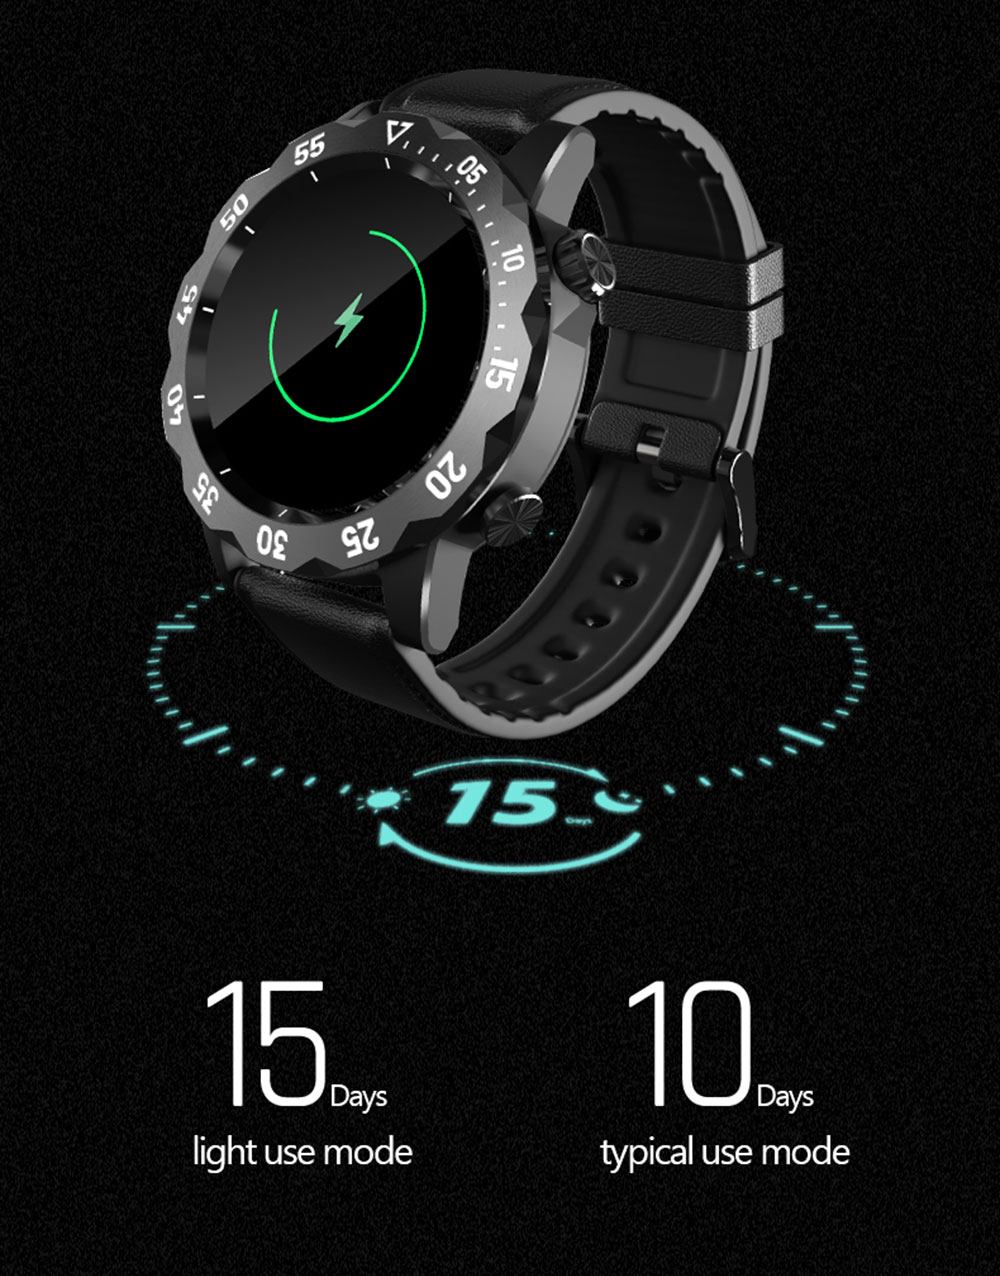 KAVVO Oyster Urban O1EL Smartwatch, Bluetooth Calling Watch, 1.32'' TFT Screen, 24h Heart Rate, Blood Oxygen - Grey